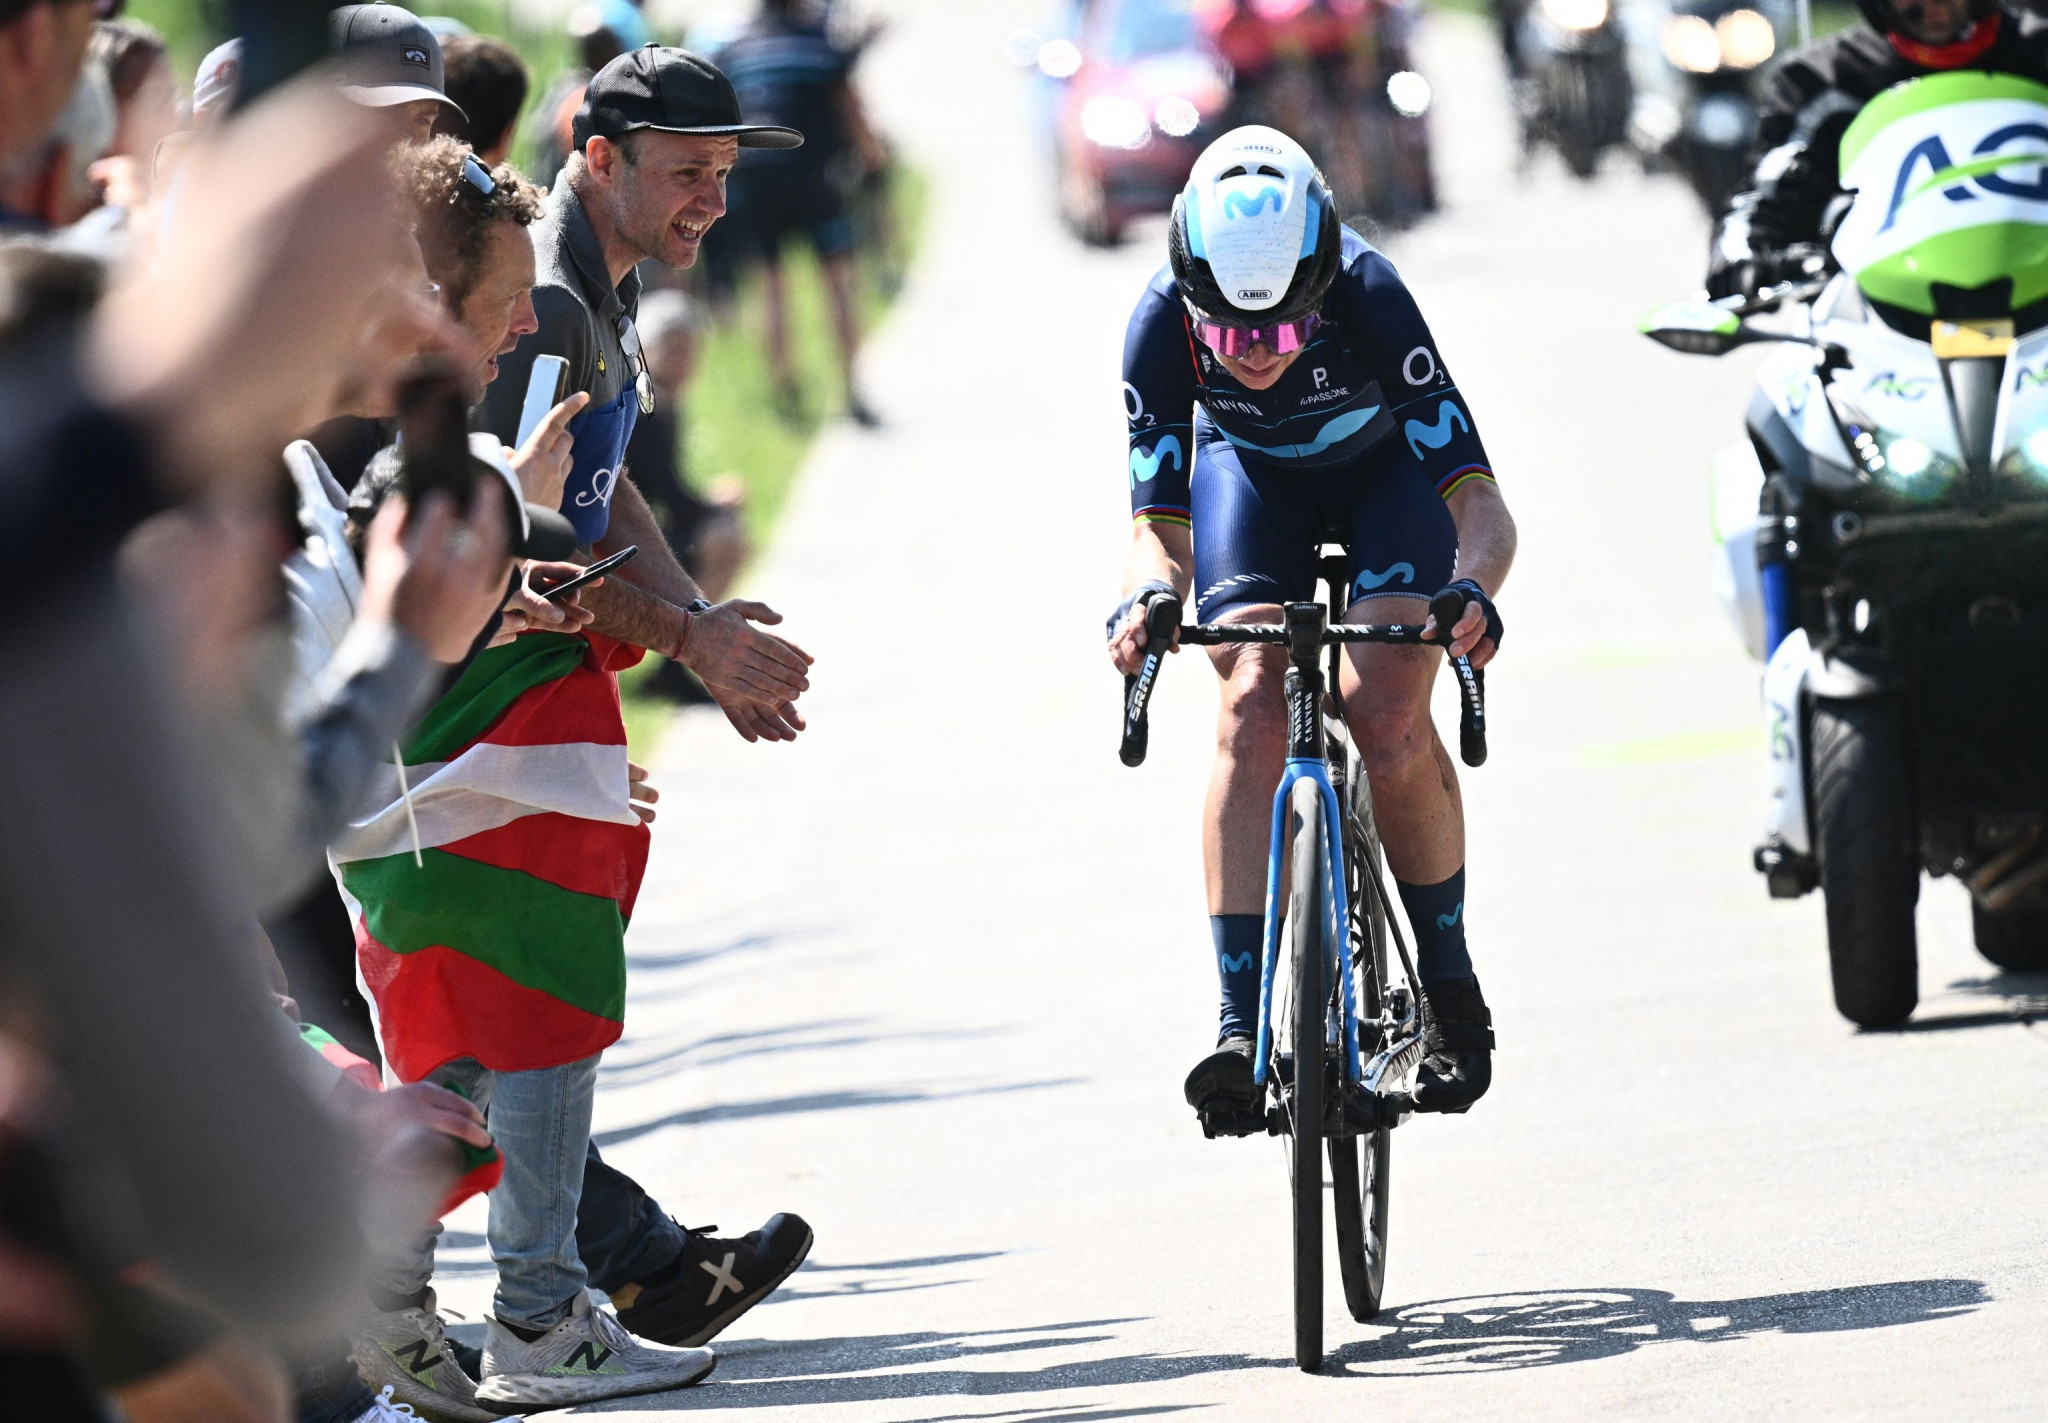 Giro d'Italia Donne champion Annemiek van Vleuten is the favourite to clinch the first-ever Tour de France Femmes title ©Getty Images